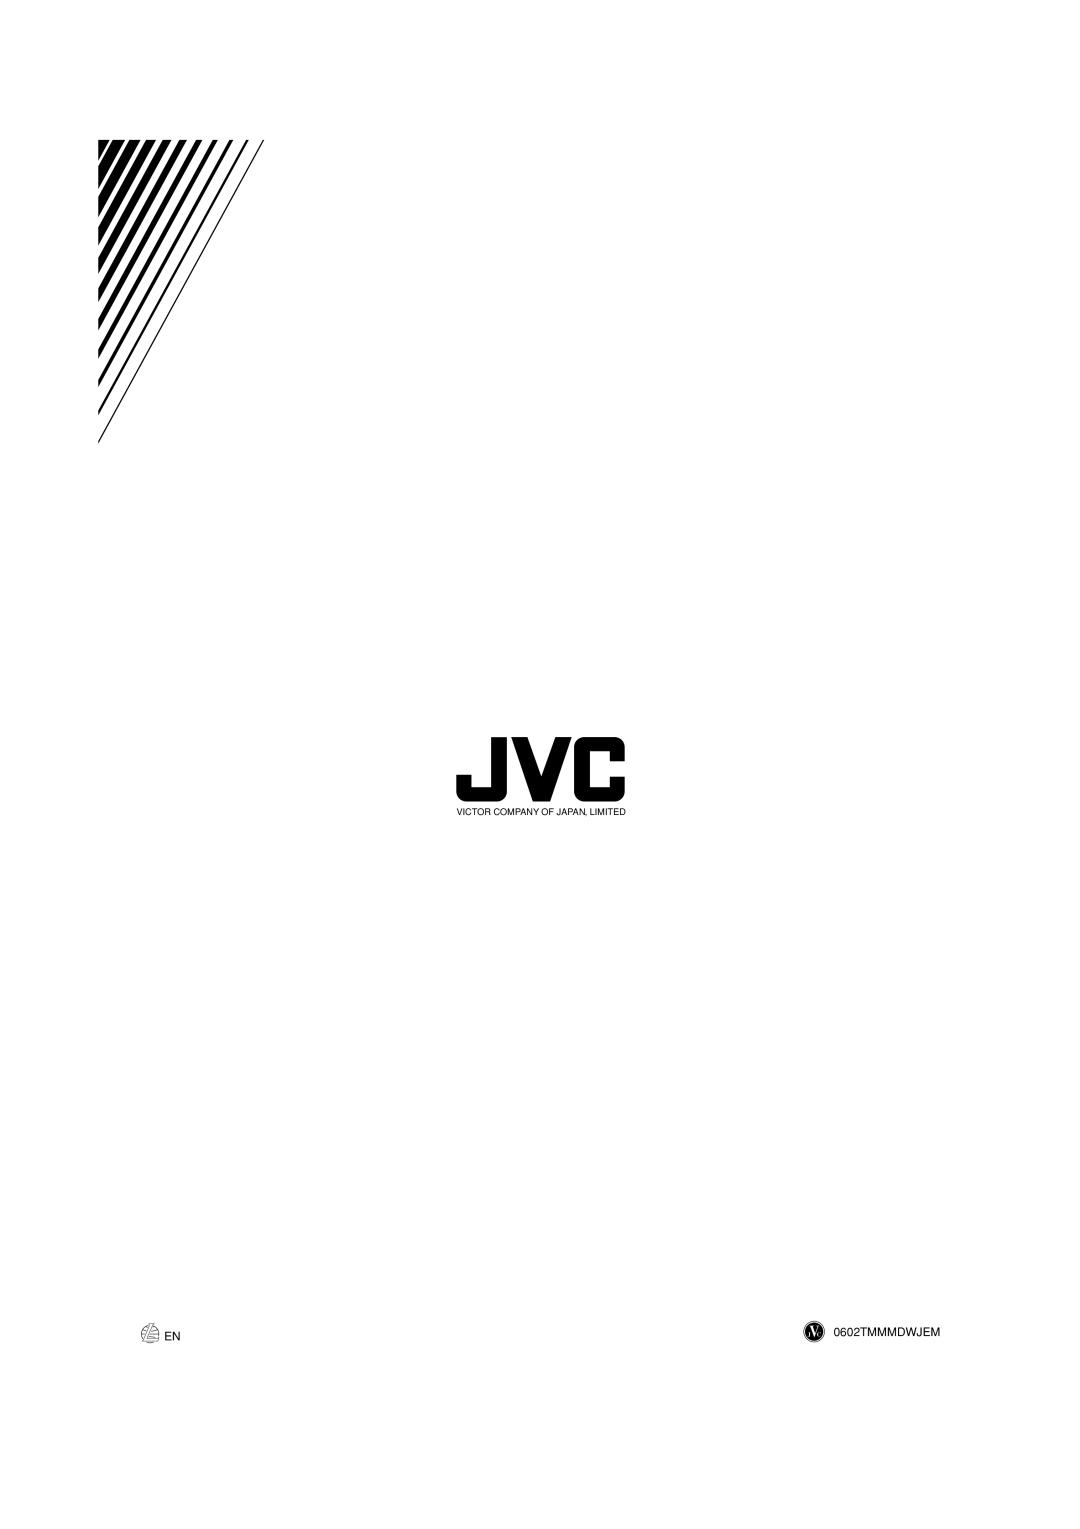 JVC SP-PWV70, SP-XSV70 manual 0602TMMMDWJEM, Victor Company Of Japan, Limited 